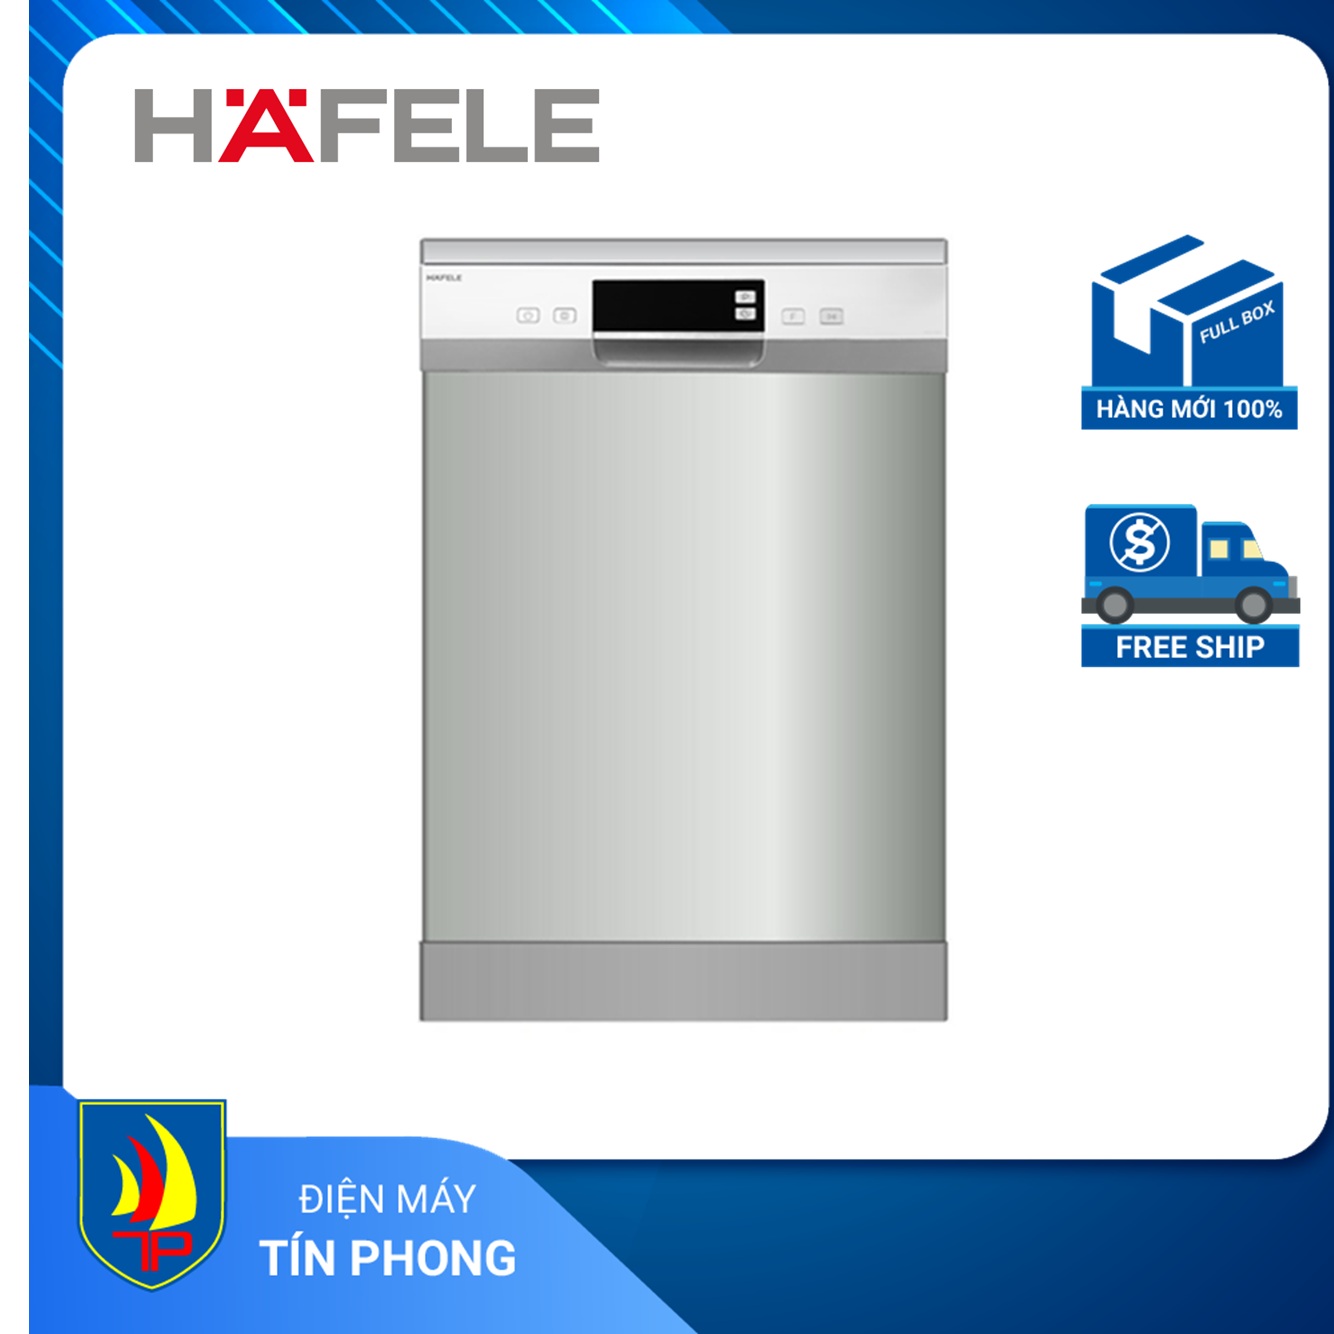 HCM Máy rửa chén độc lập Hafele HDW-F60E 538.21.200 15 bộ